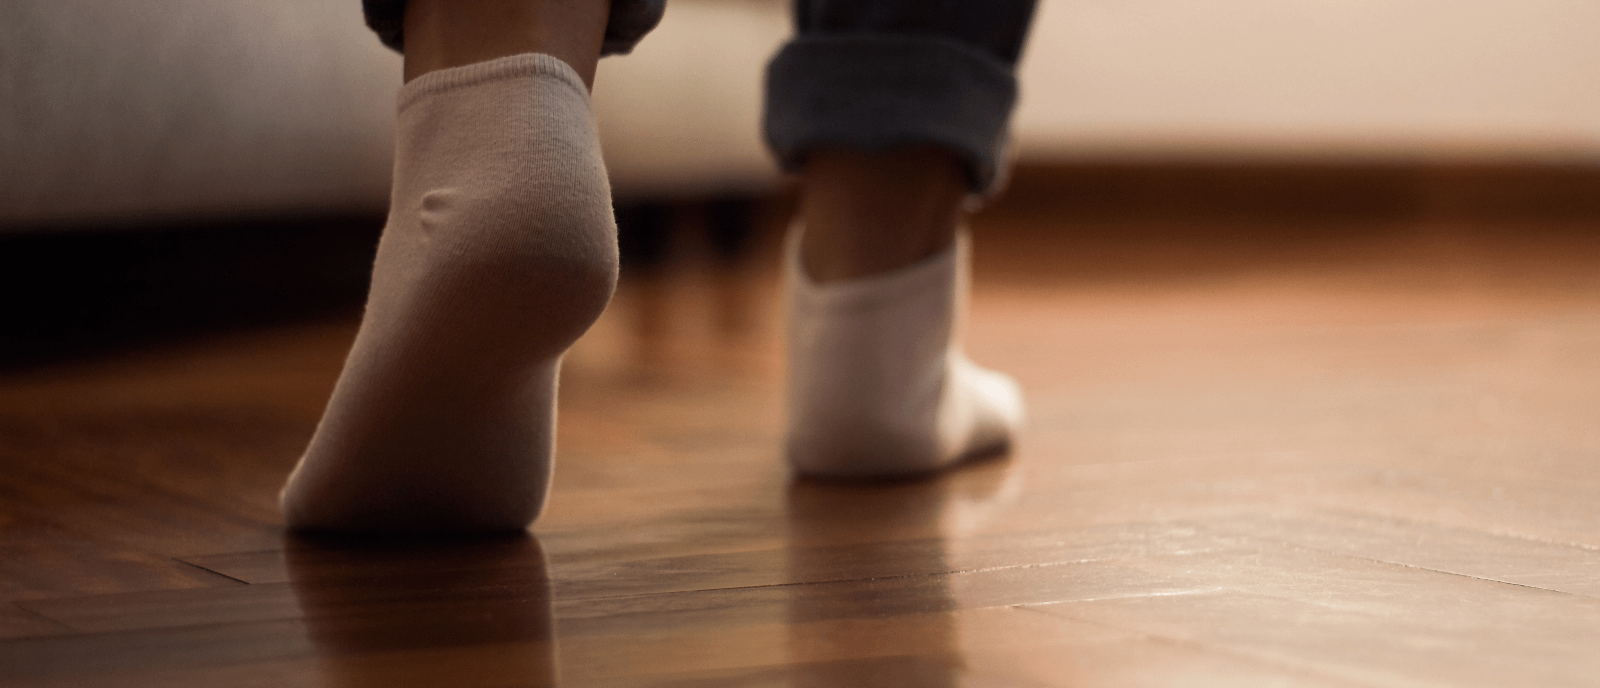 Person walking on wooden floor, whilst wearing socks. 